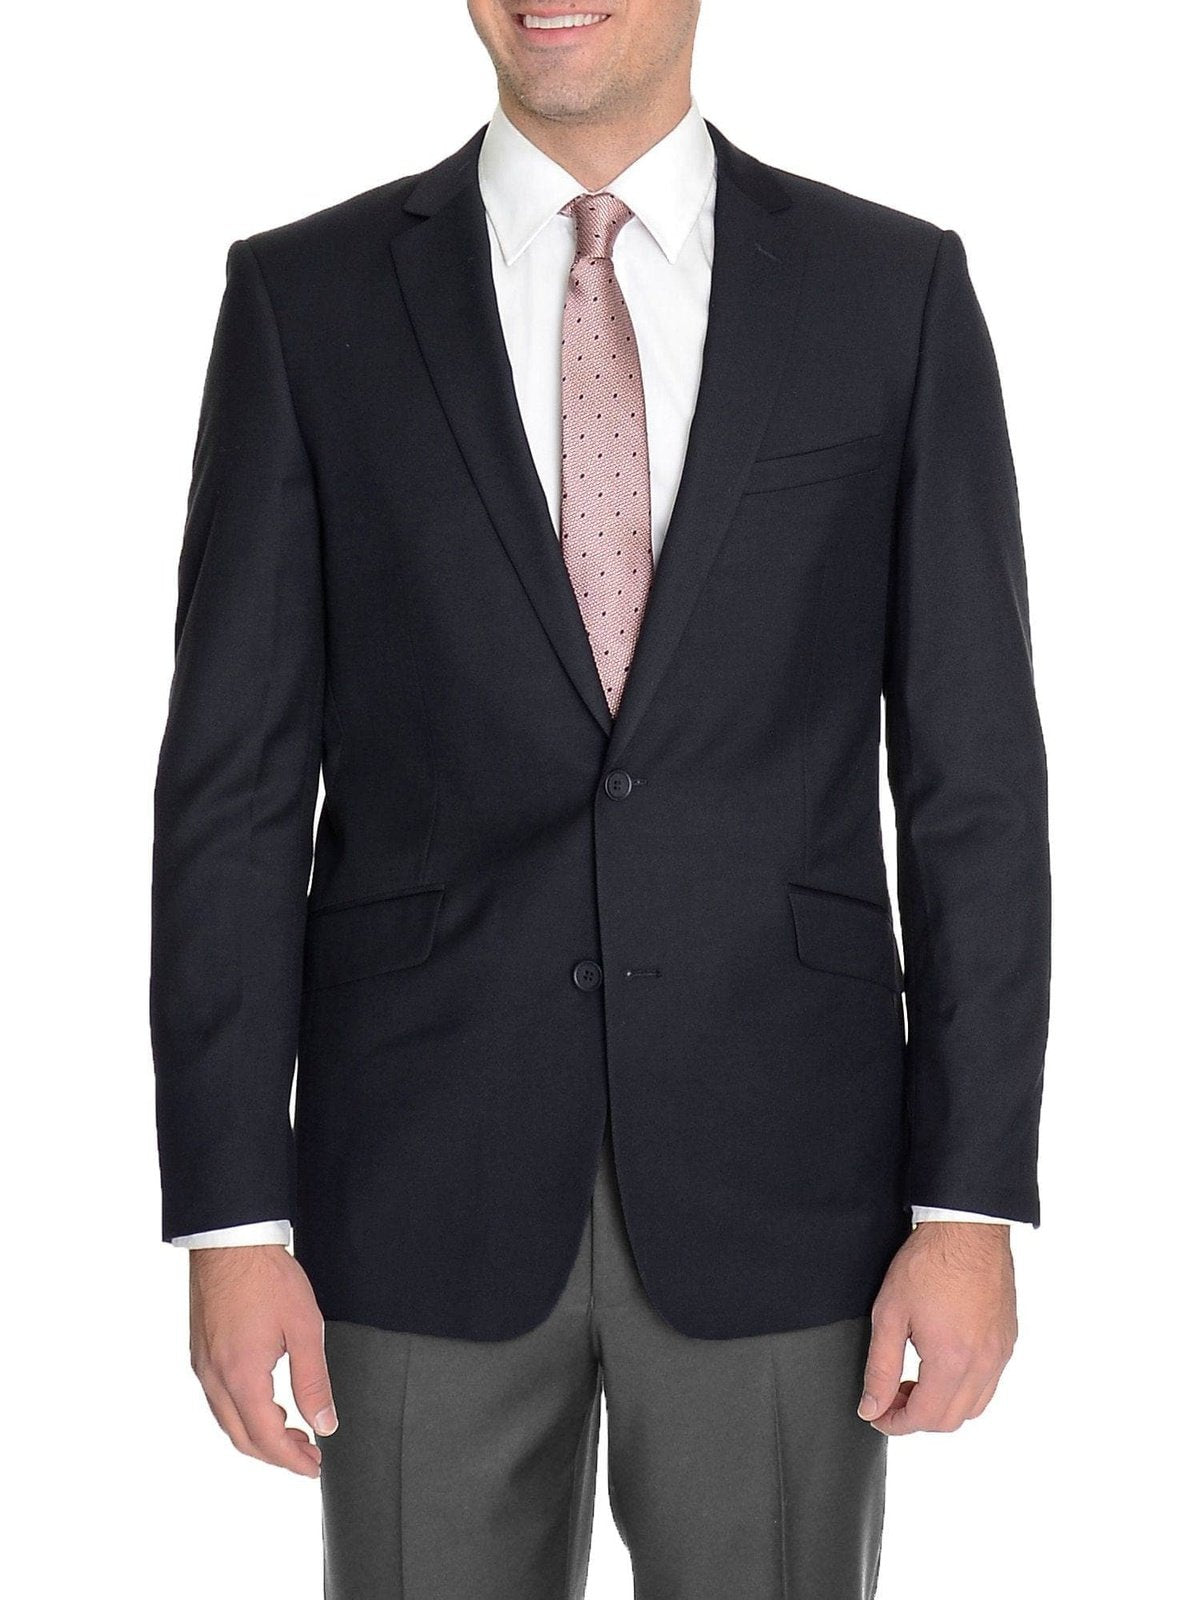 QIPOPIQ Clearance Men's Suits New Solid Color Single Two Button Slim Fit  Mens Formal Blazer Suit Jacket 